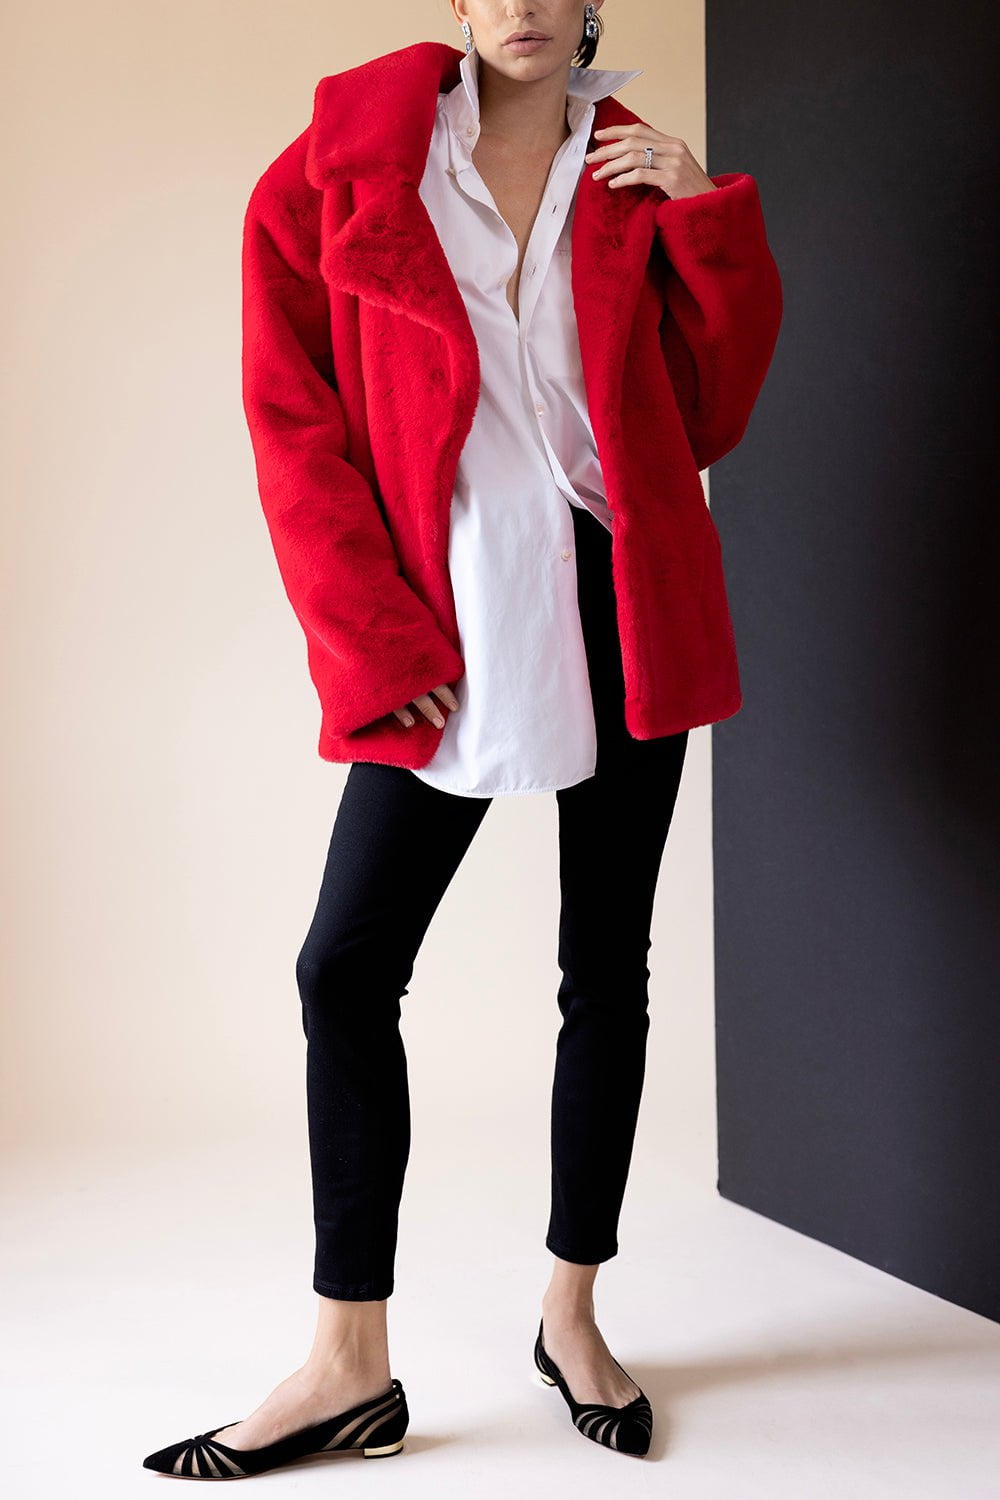 STELLA MCCARTNEY-Faux Fur Short Jacket-TANGO RED